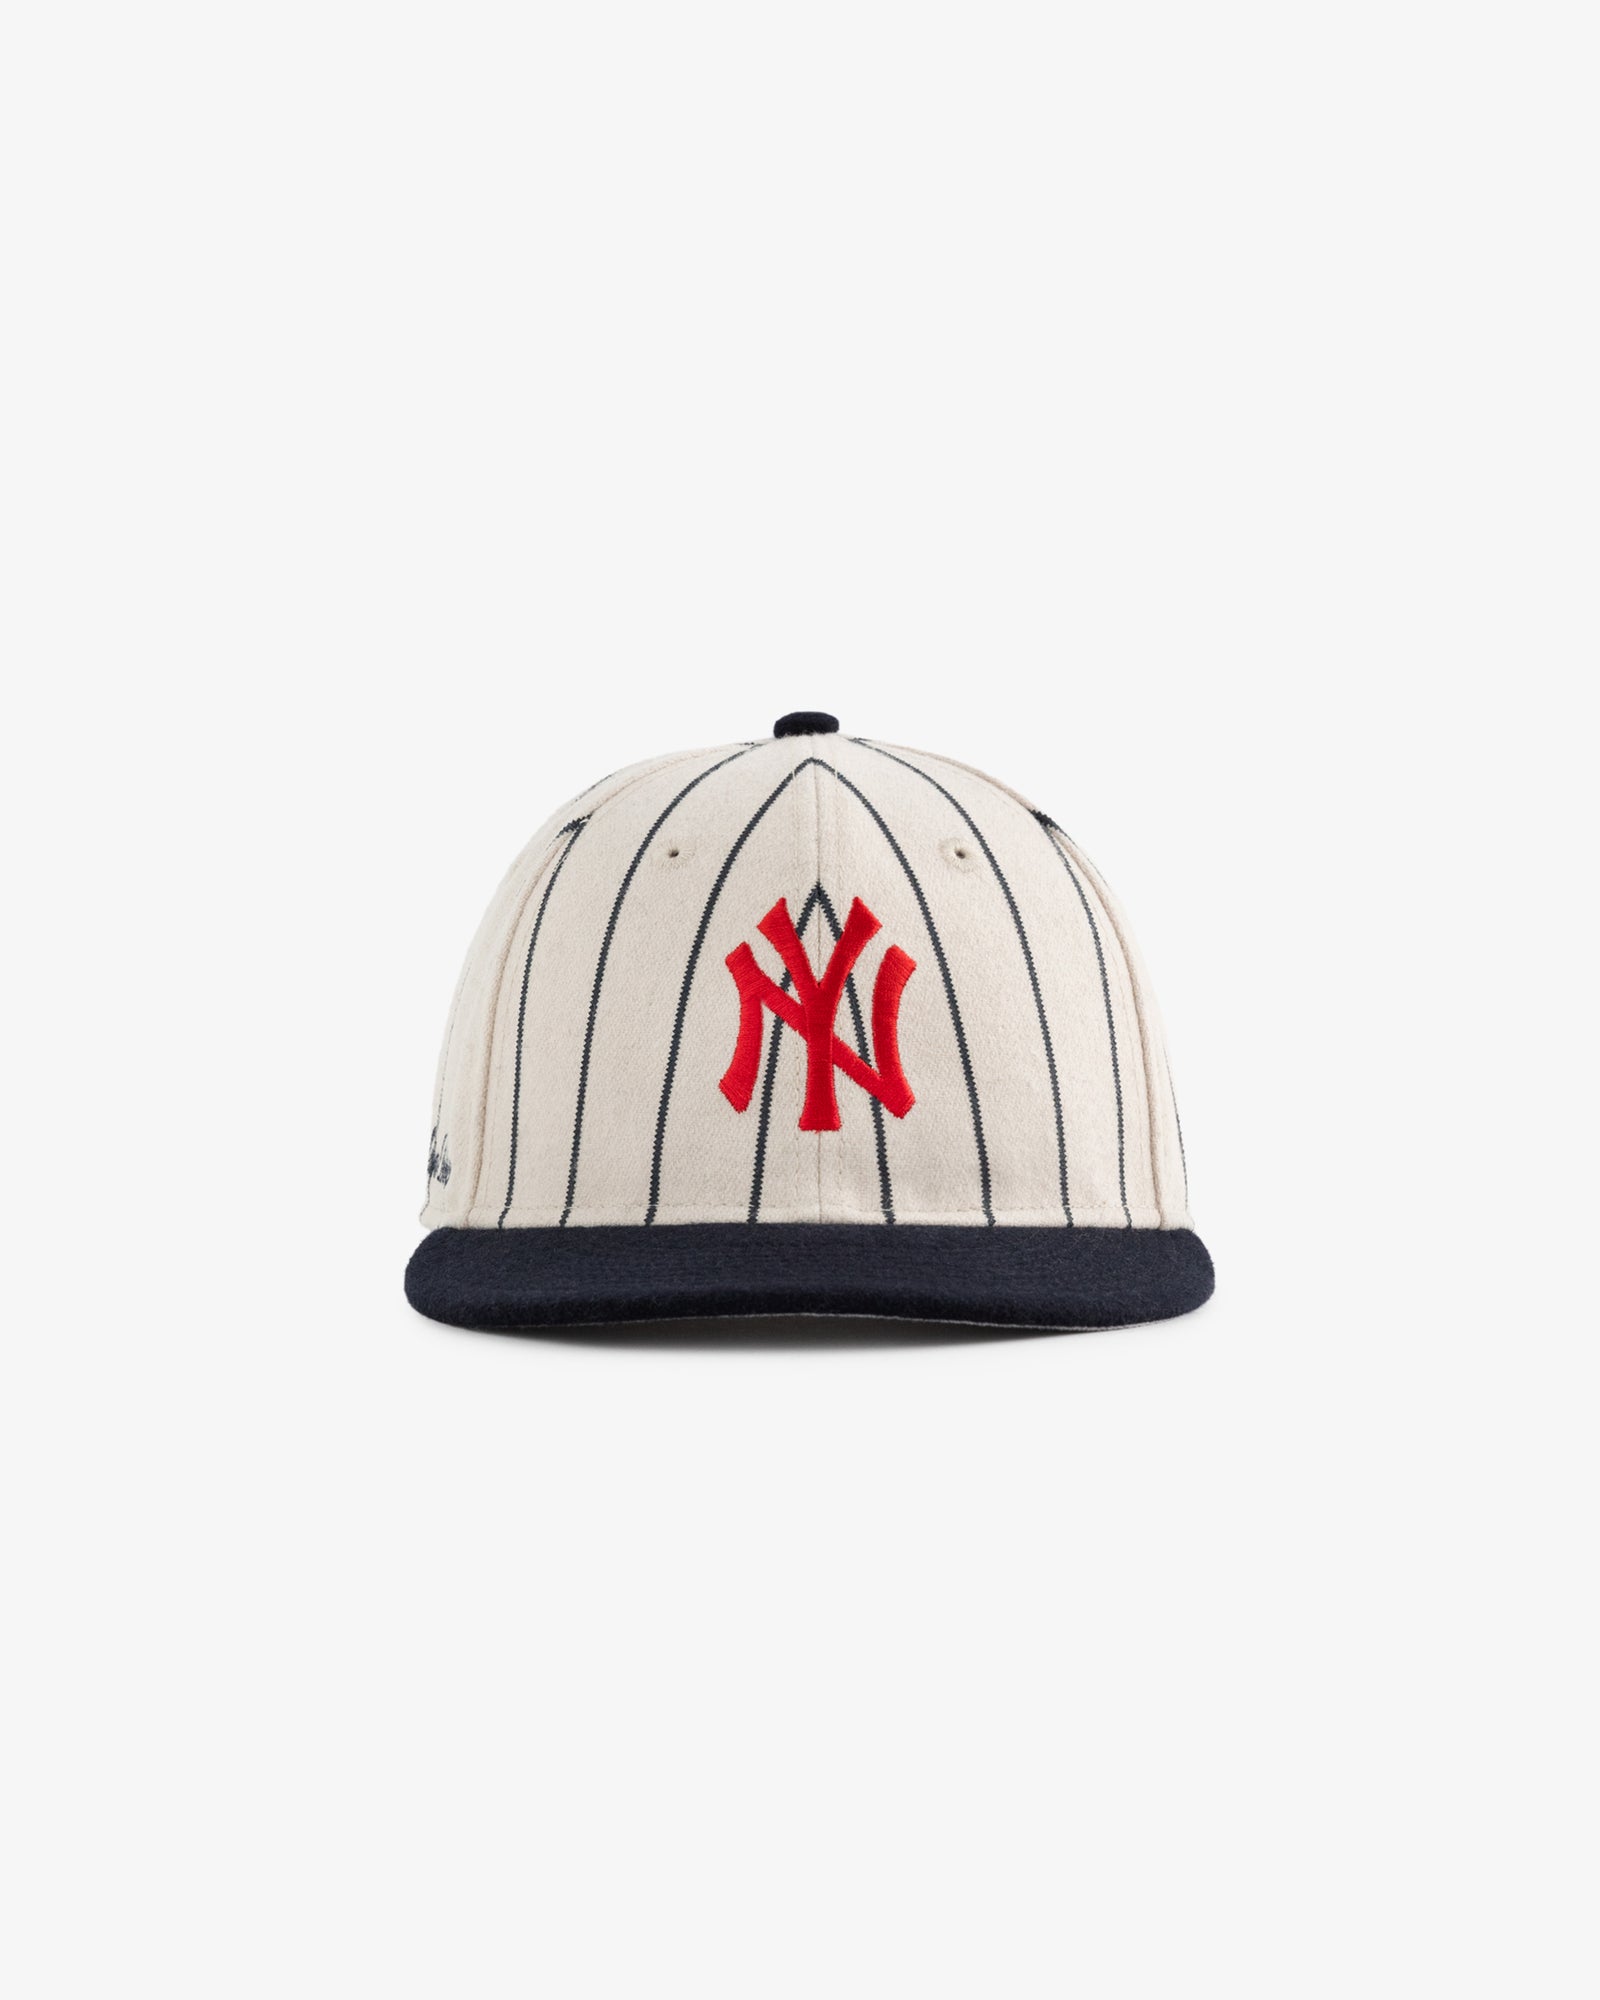 ALD New Era Wool Yankees Hat Cream-